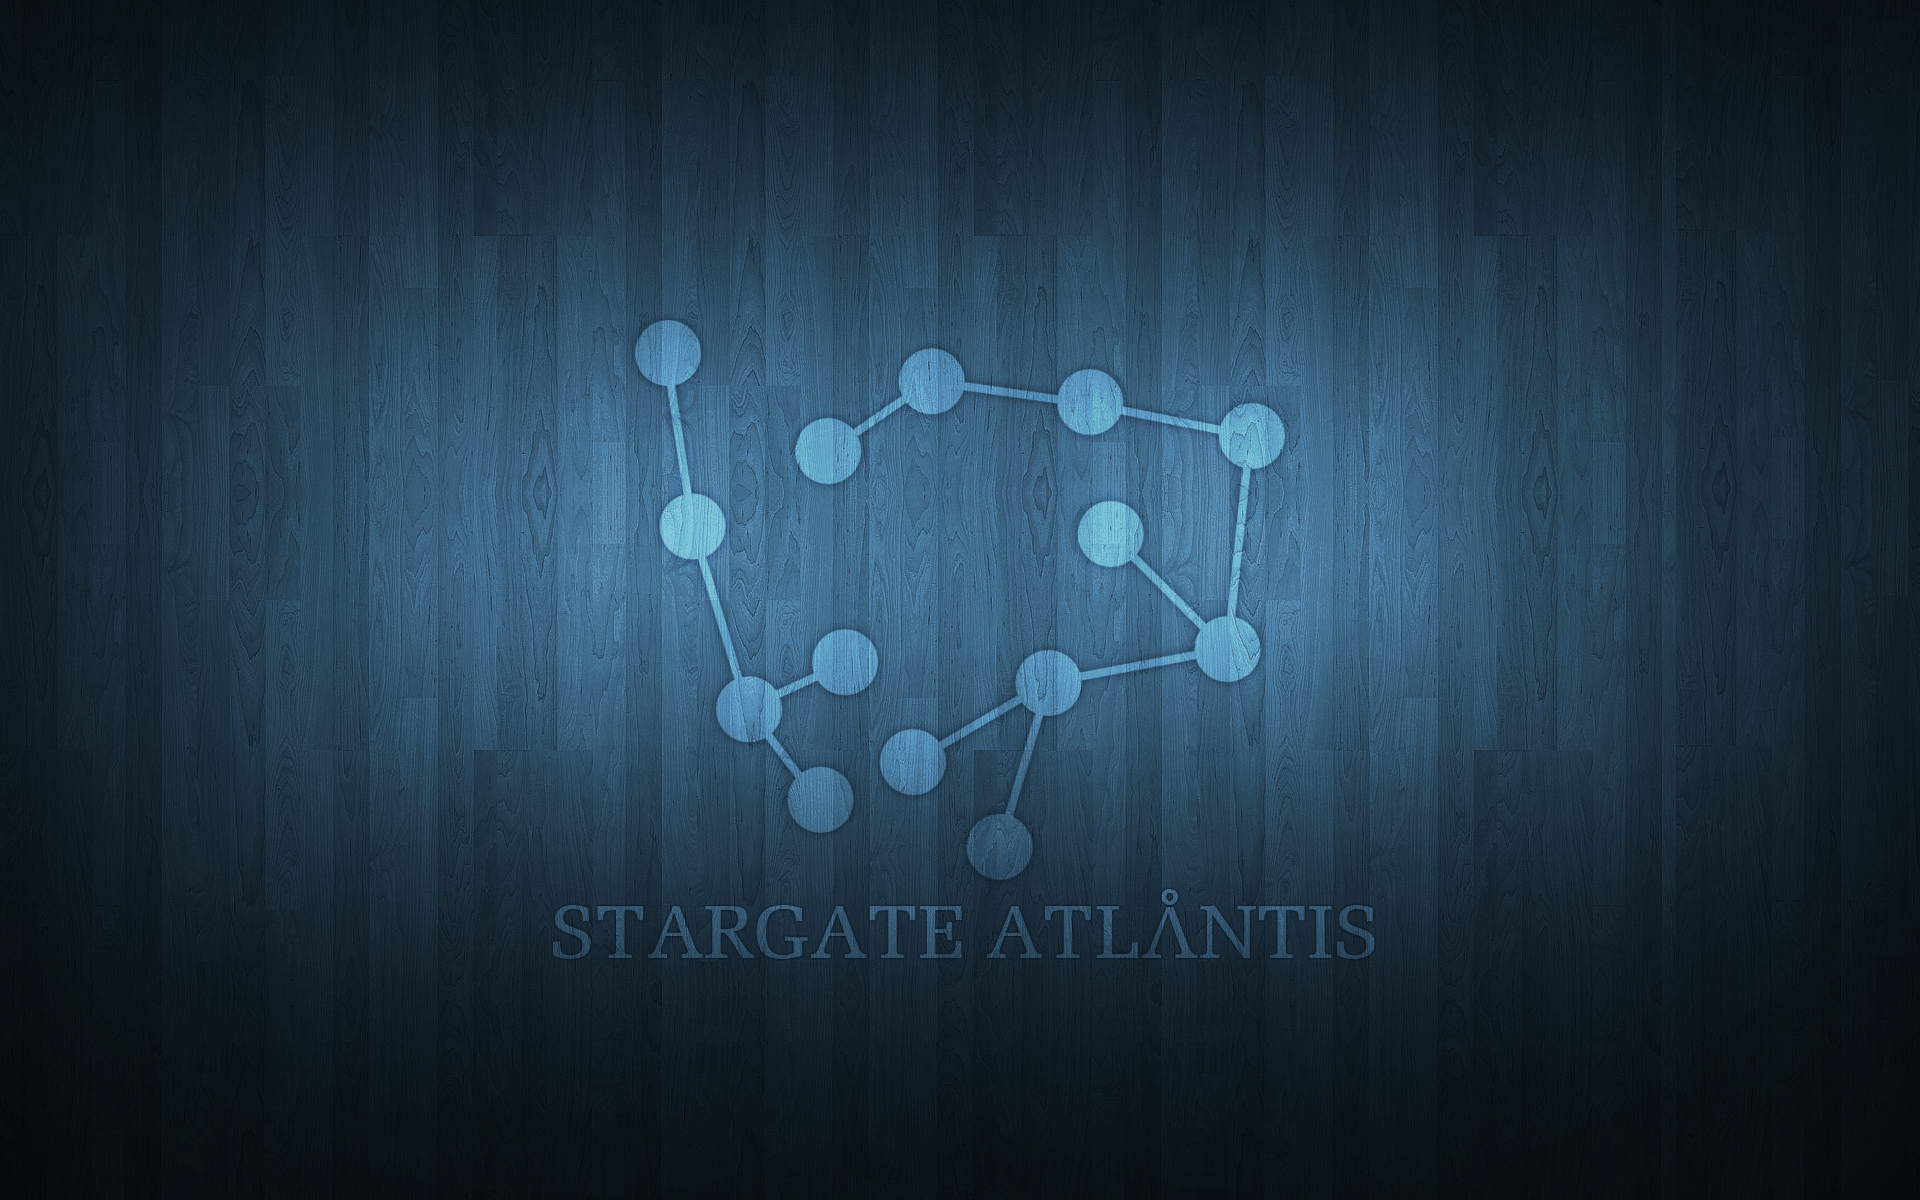 Stargate Atlantis Wooden Wallpaper By Aether176